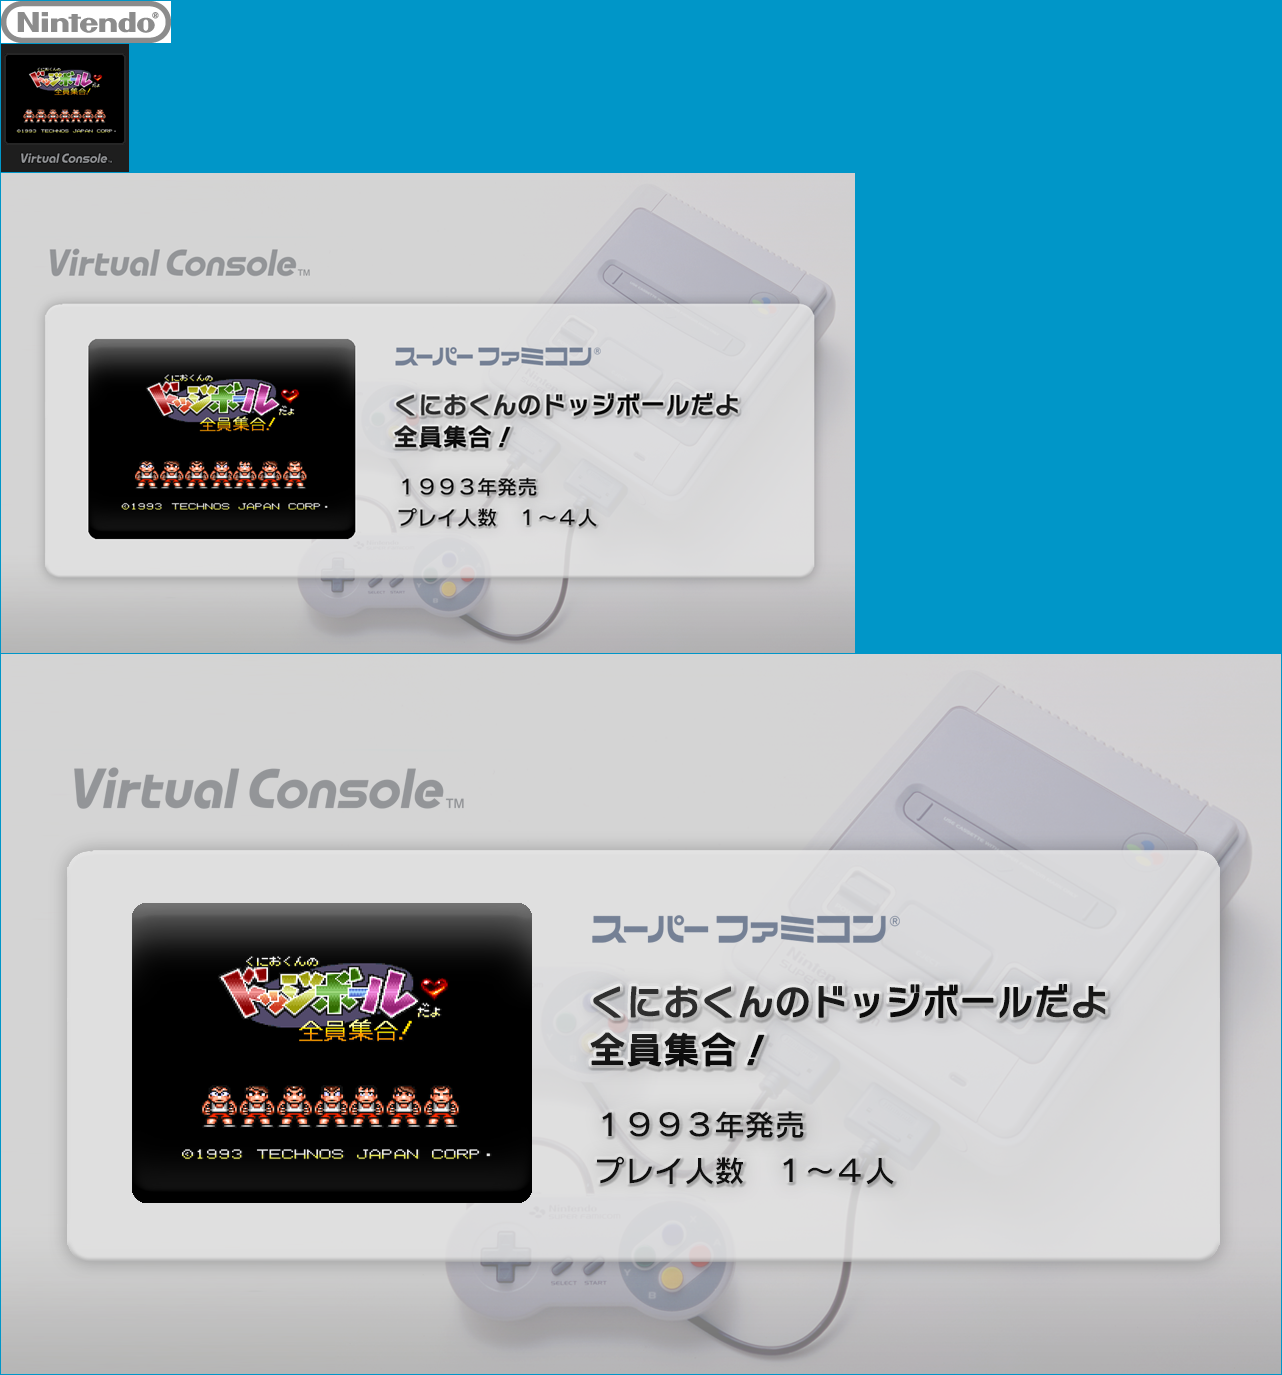 Virtual Console - Kunio-kun no Dodgeball da yo Zenin Shūgō!